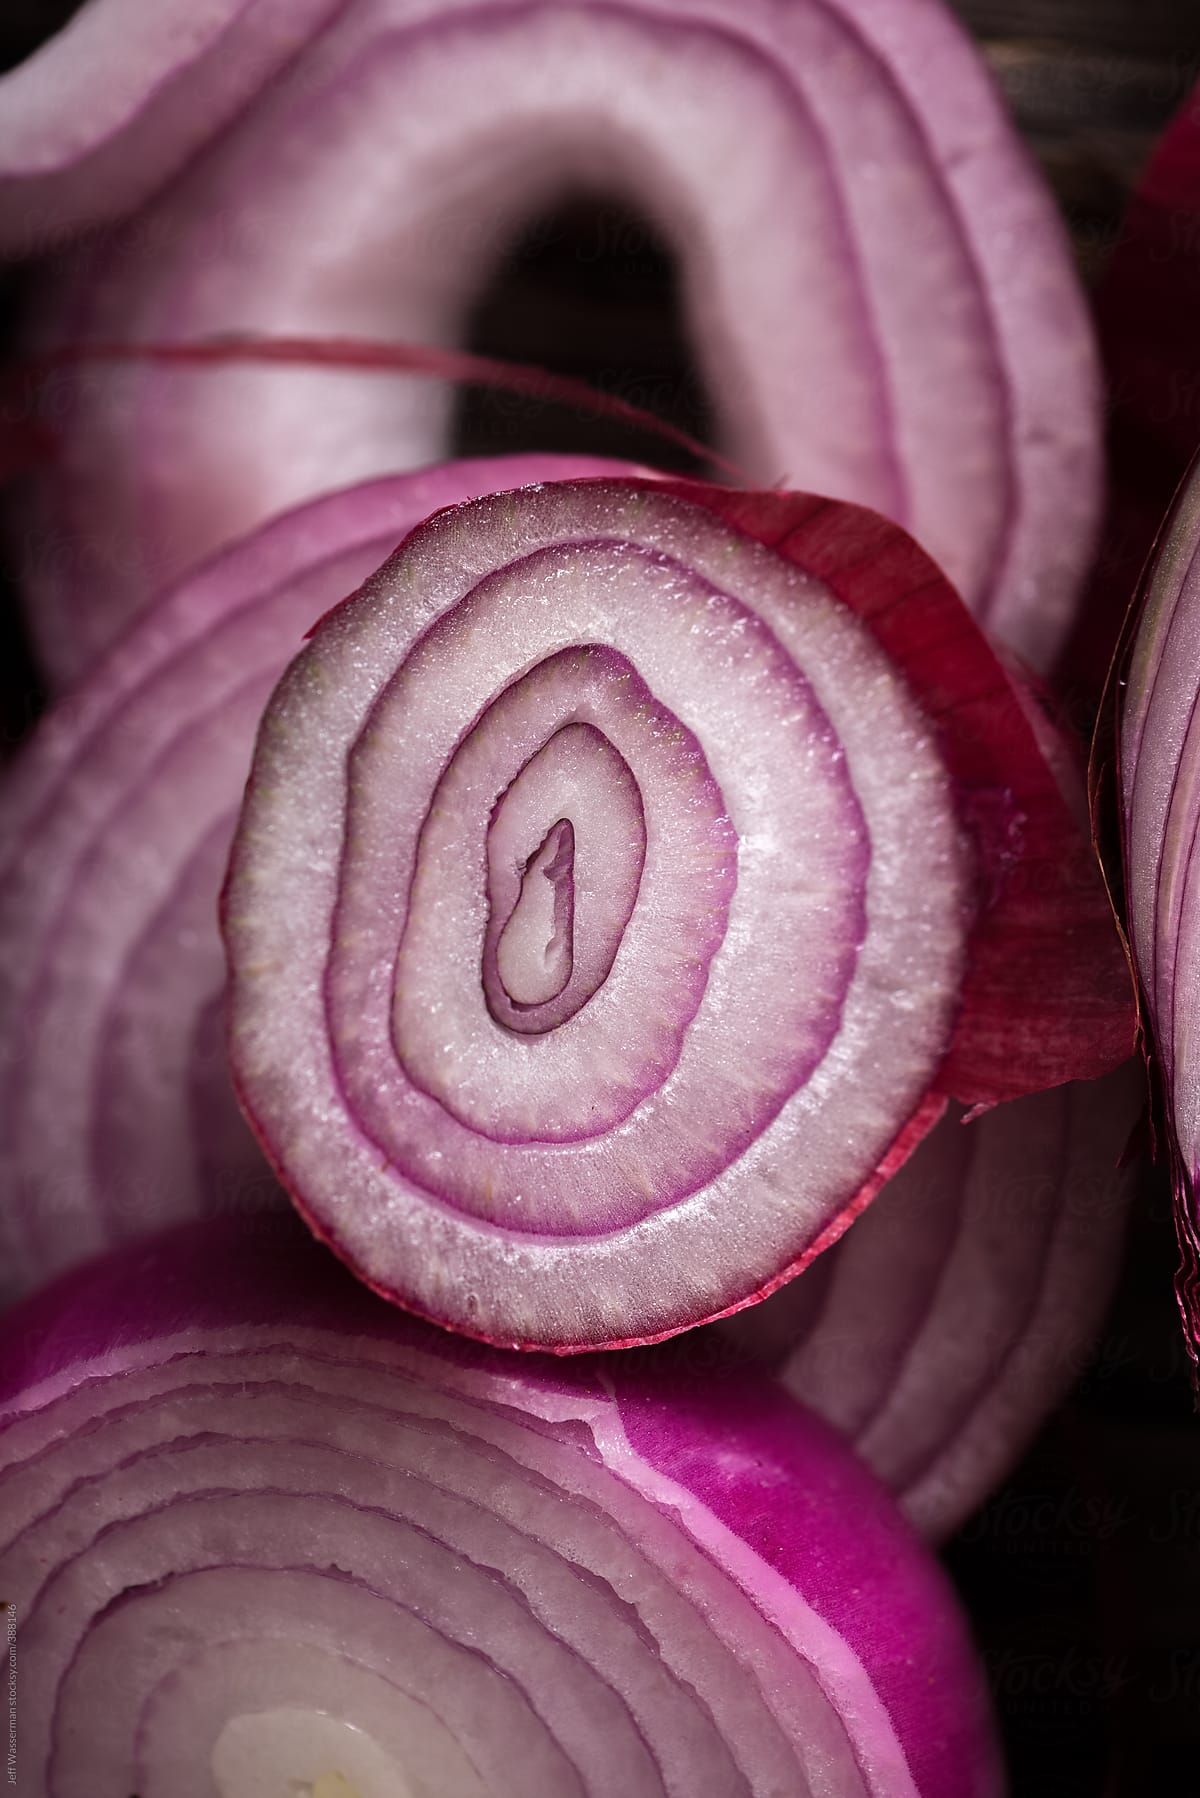 Spanish Onions Sliced in Closeup